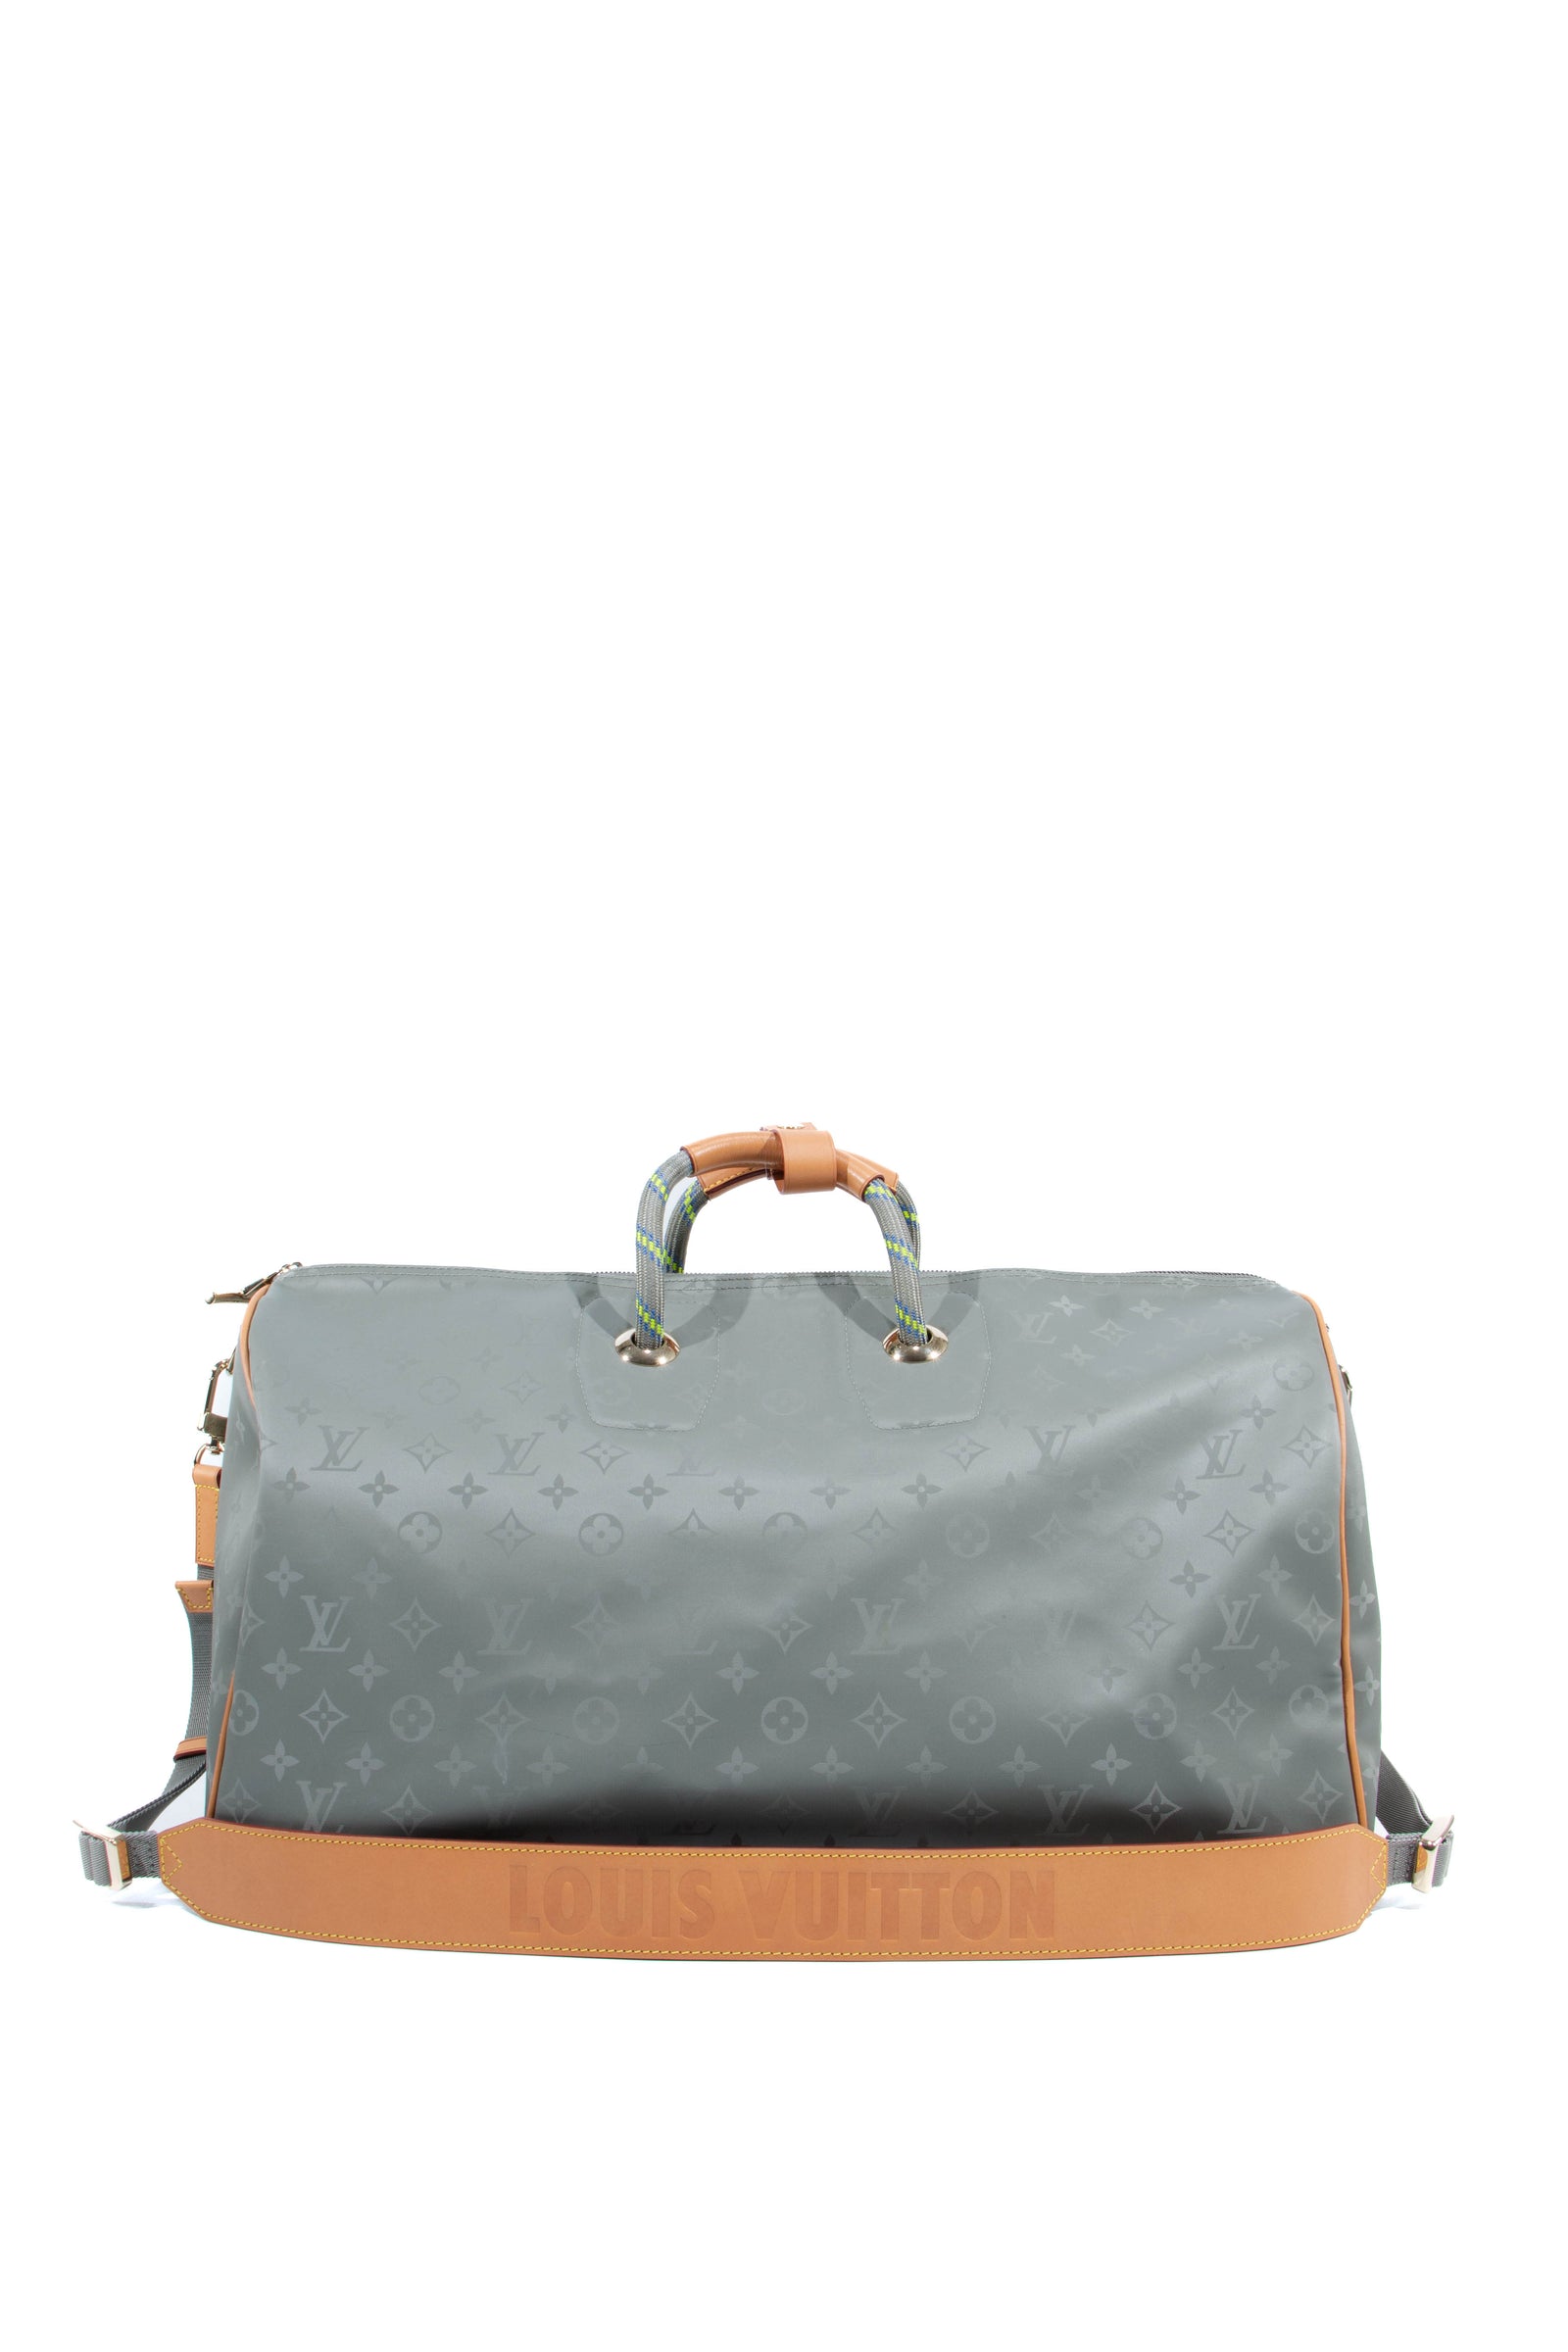 Louis Vuitton Keepall Bandouliere 50 Titanium Grey Duffle Weekend Travel Bag